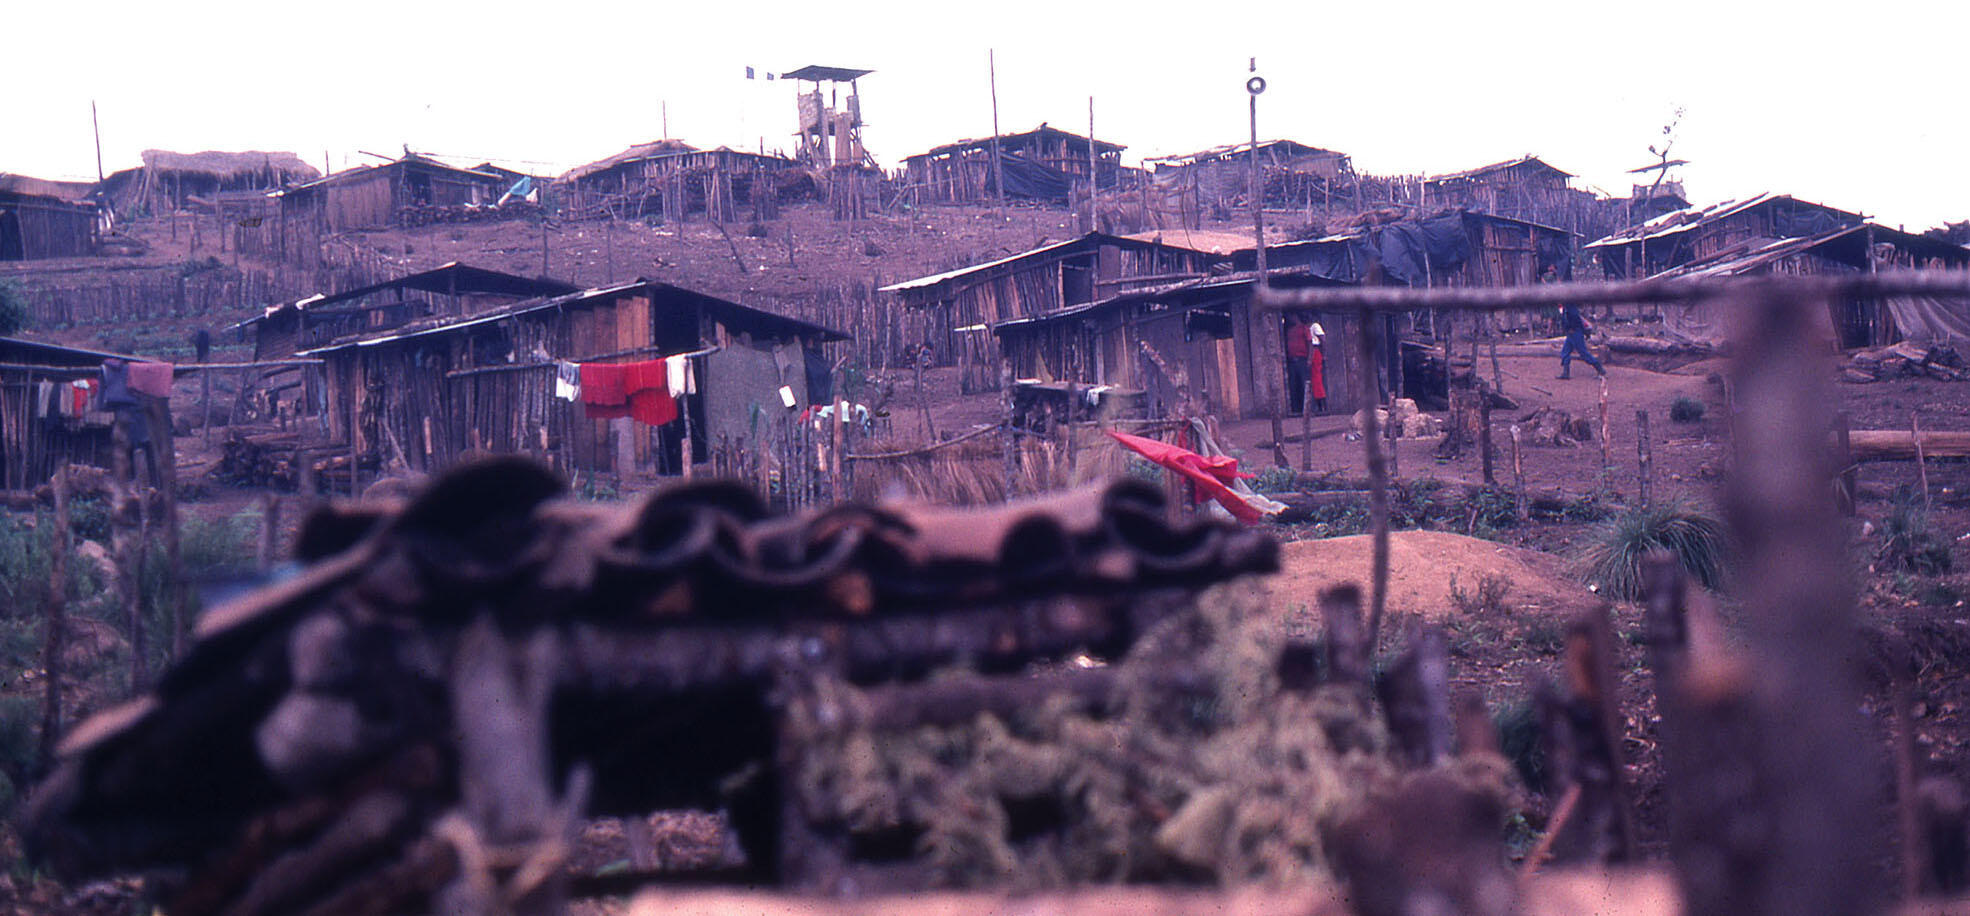 The huts and muddy streets of the “model village” of La Pista, Ixil region, Guatemala, March 1983. (Photo courtesy of Beatriz Manz.)